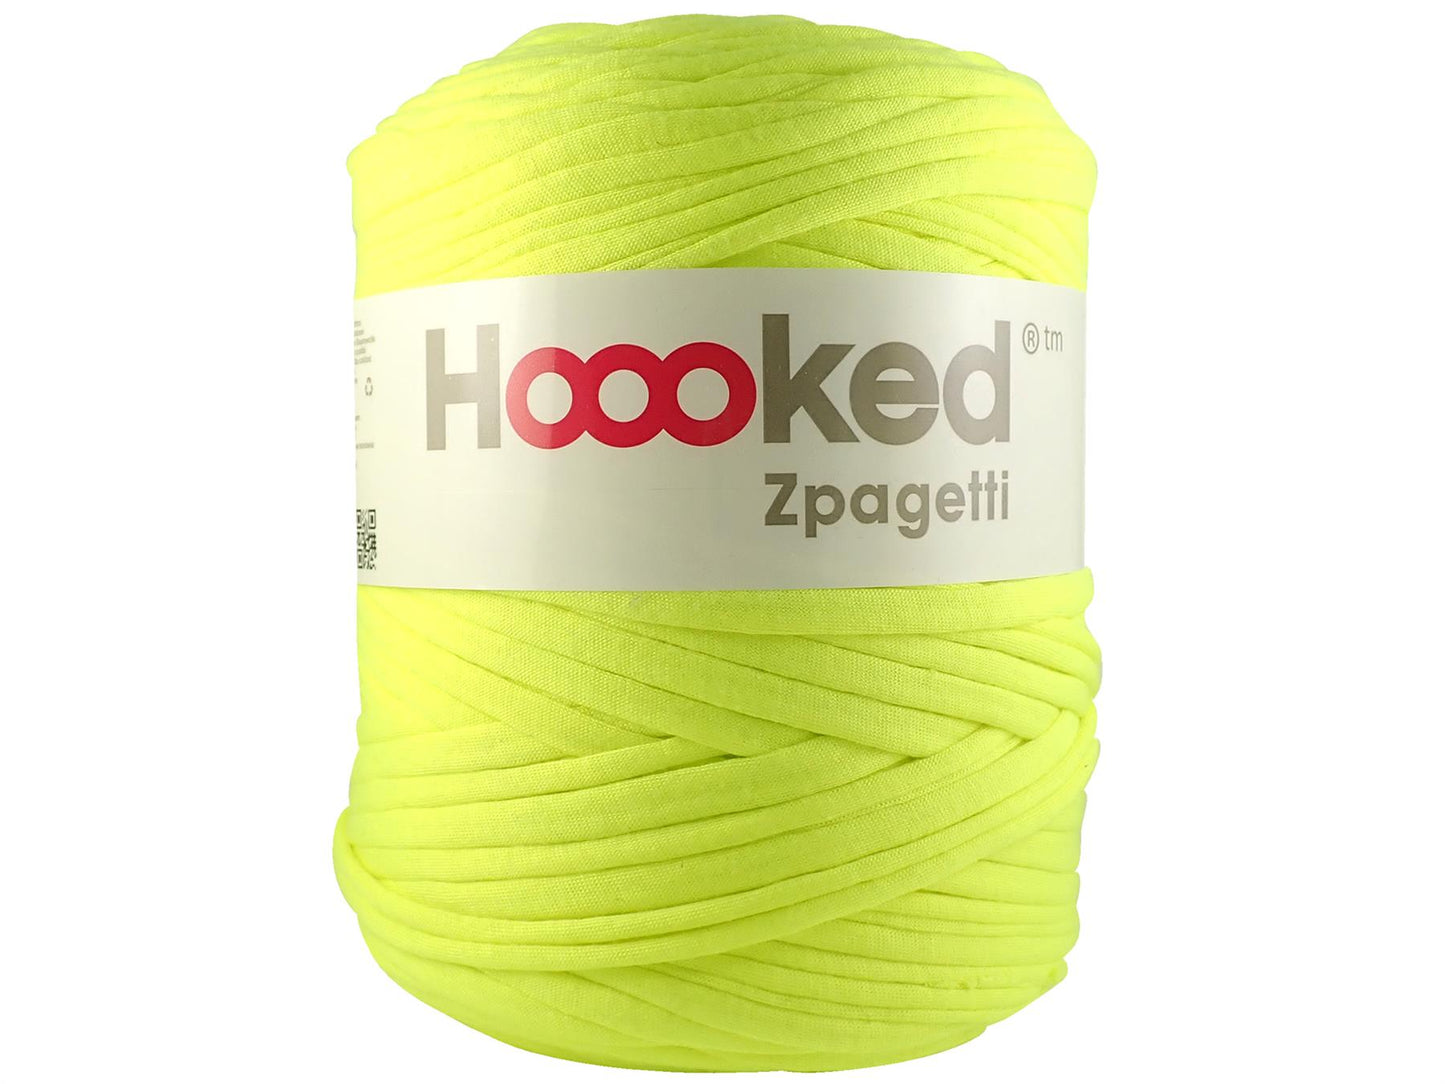 Hoooked Zpagetti Neon Yellow Cotton T-Shirt Yarn - 120M 700g